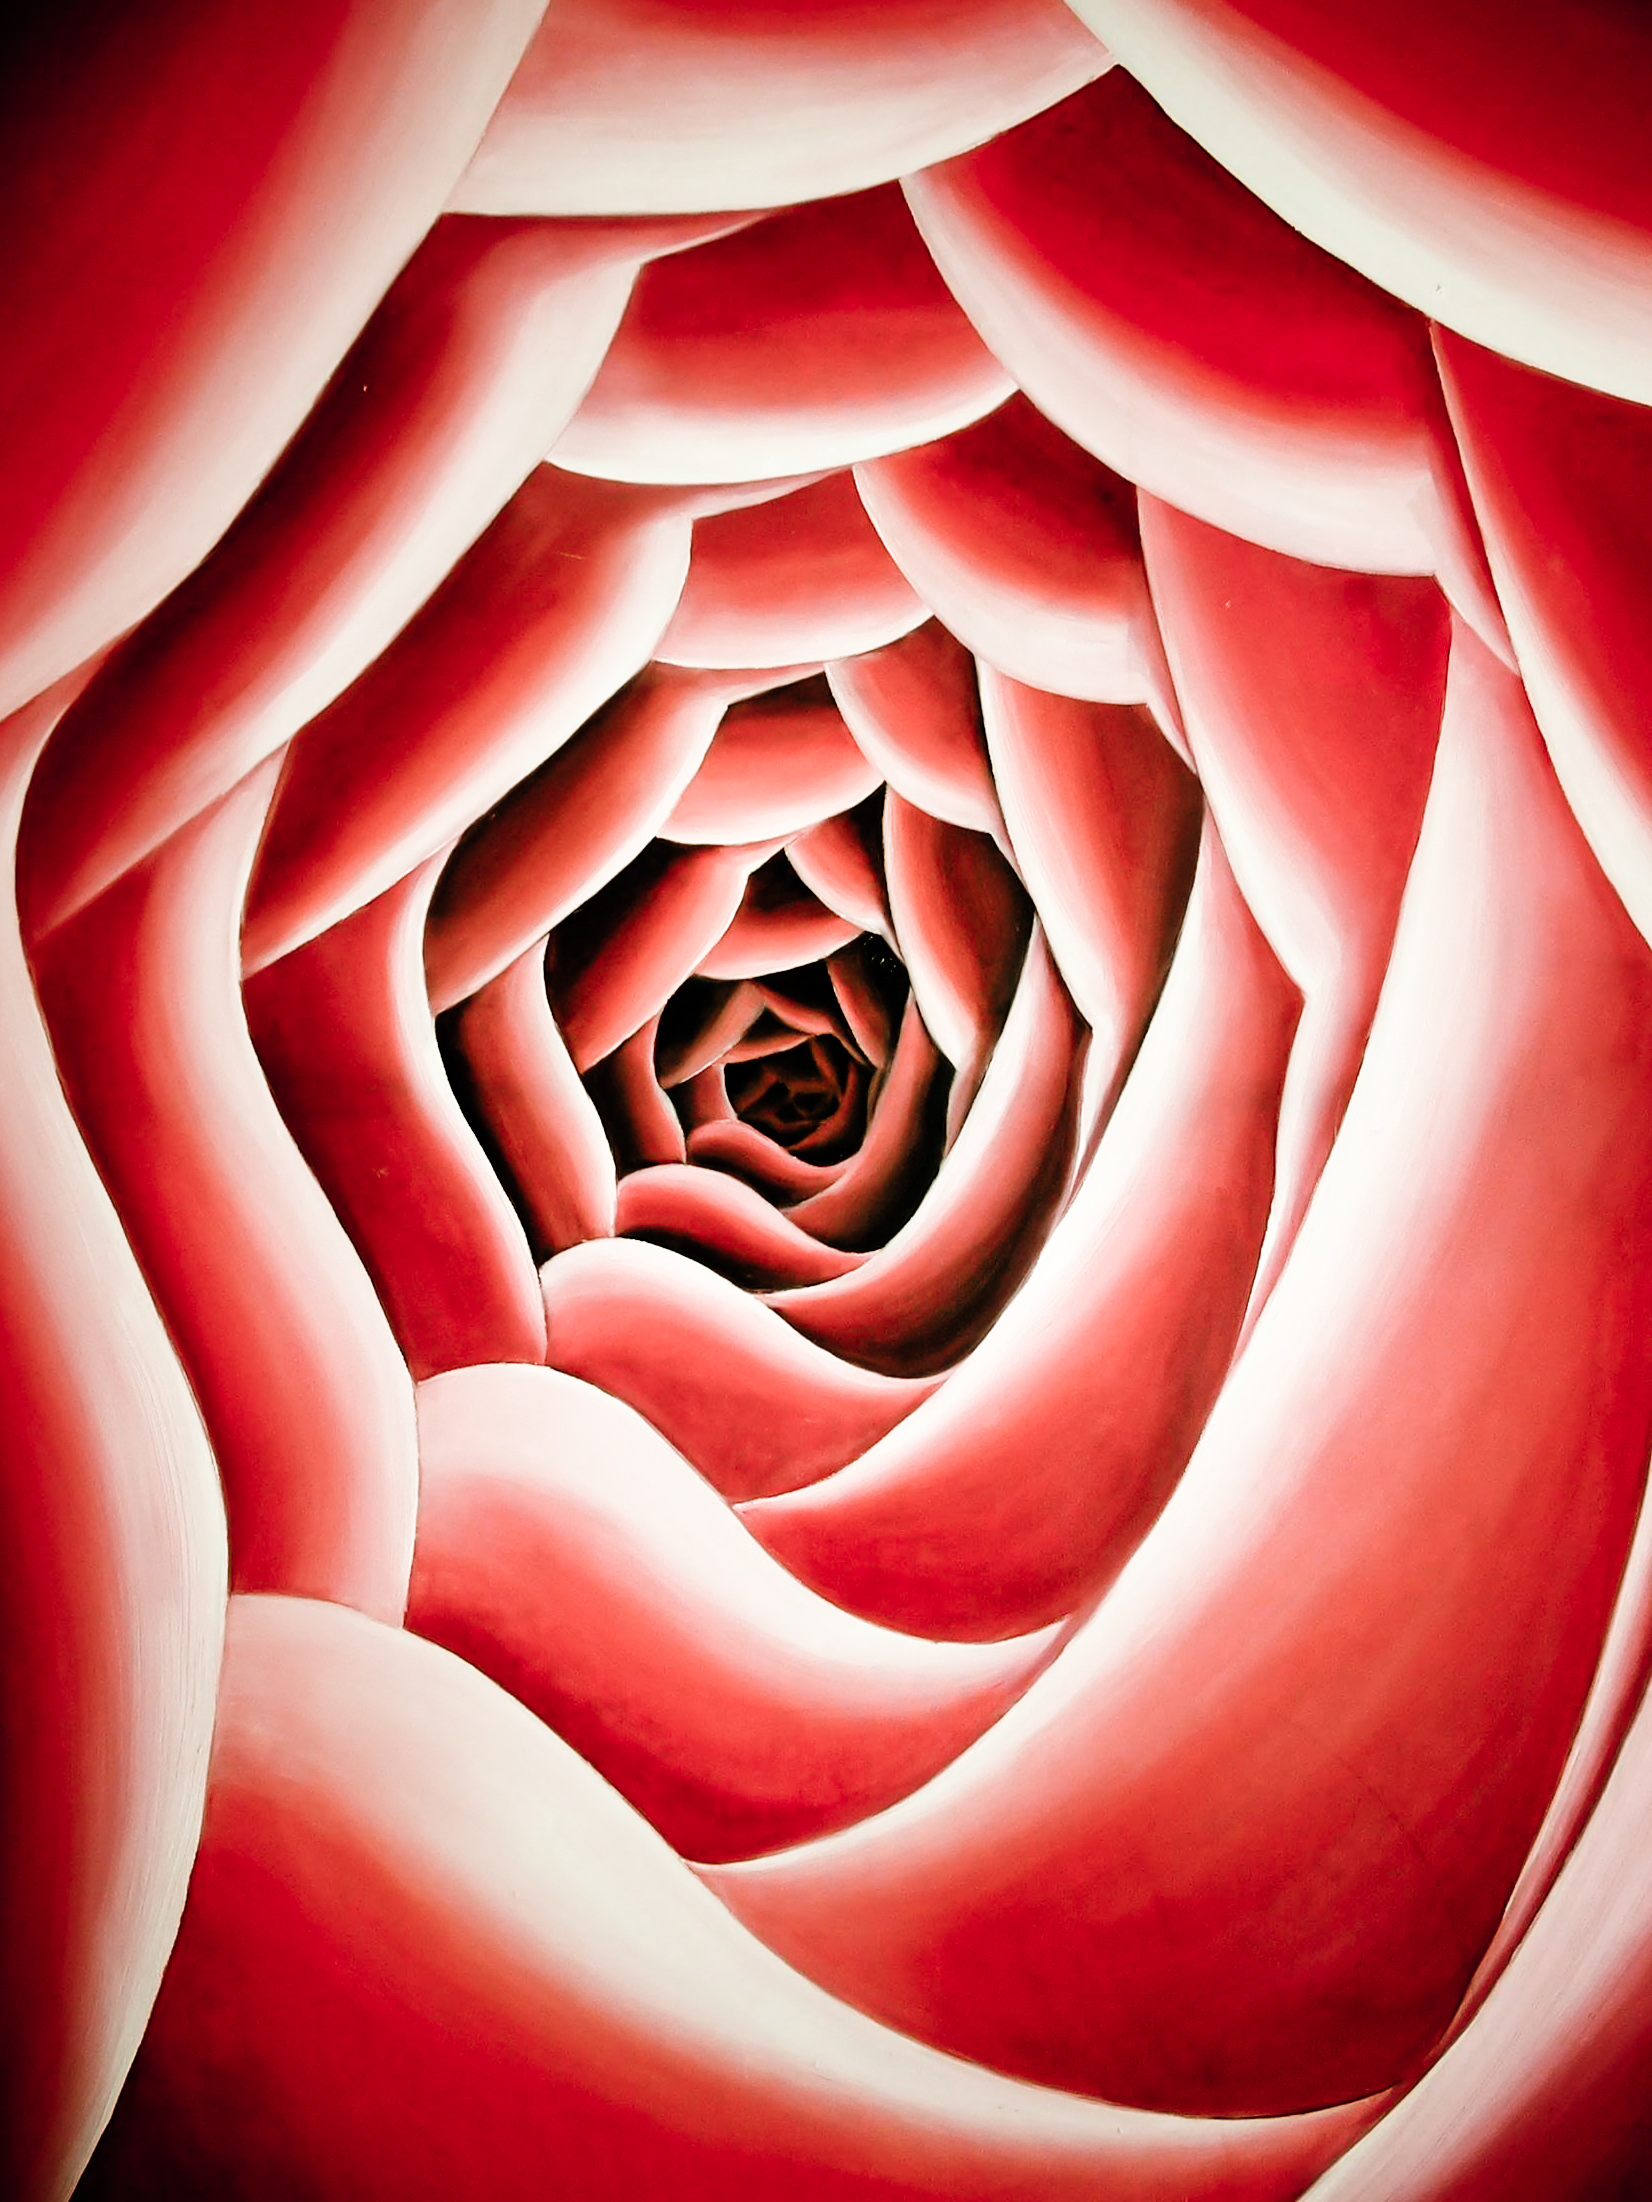 Rose painting photo